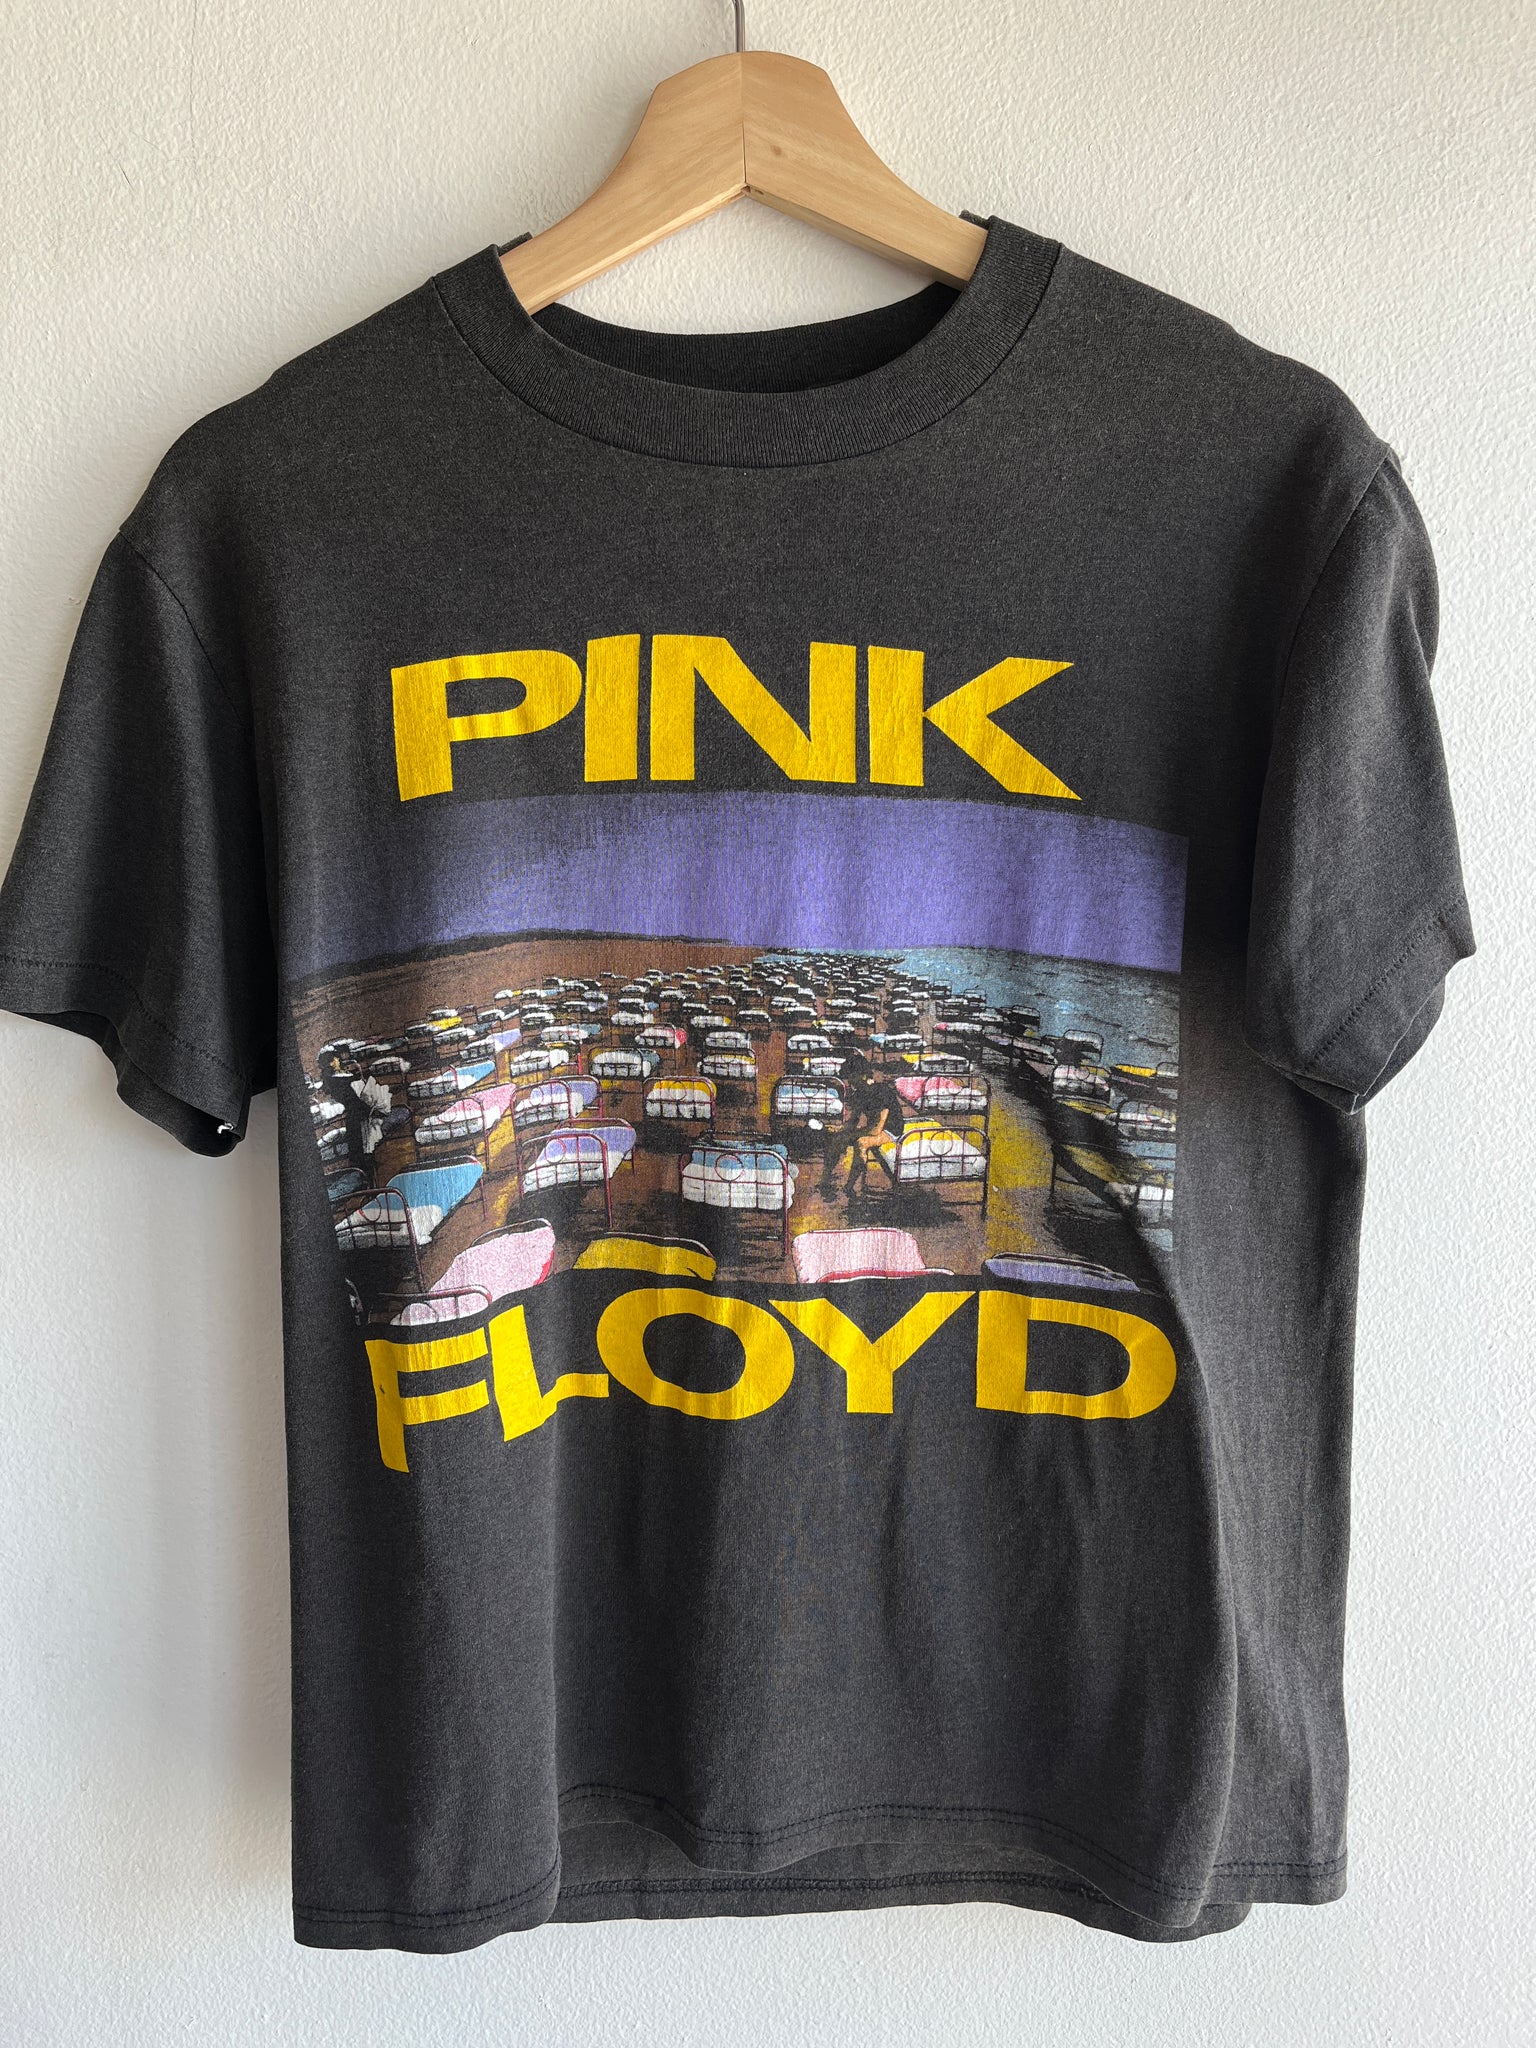 Vintage 1987 Pink Floyd Tour T-Shirt